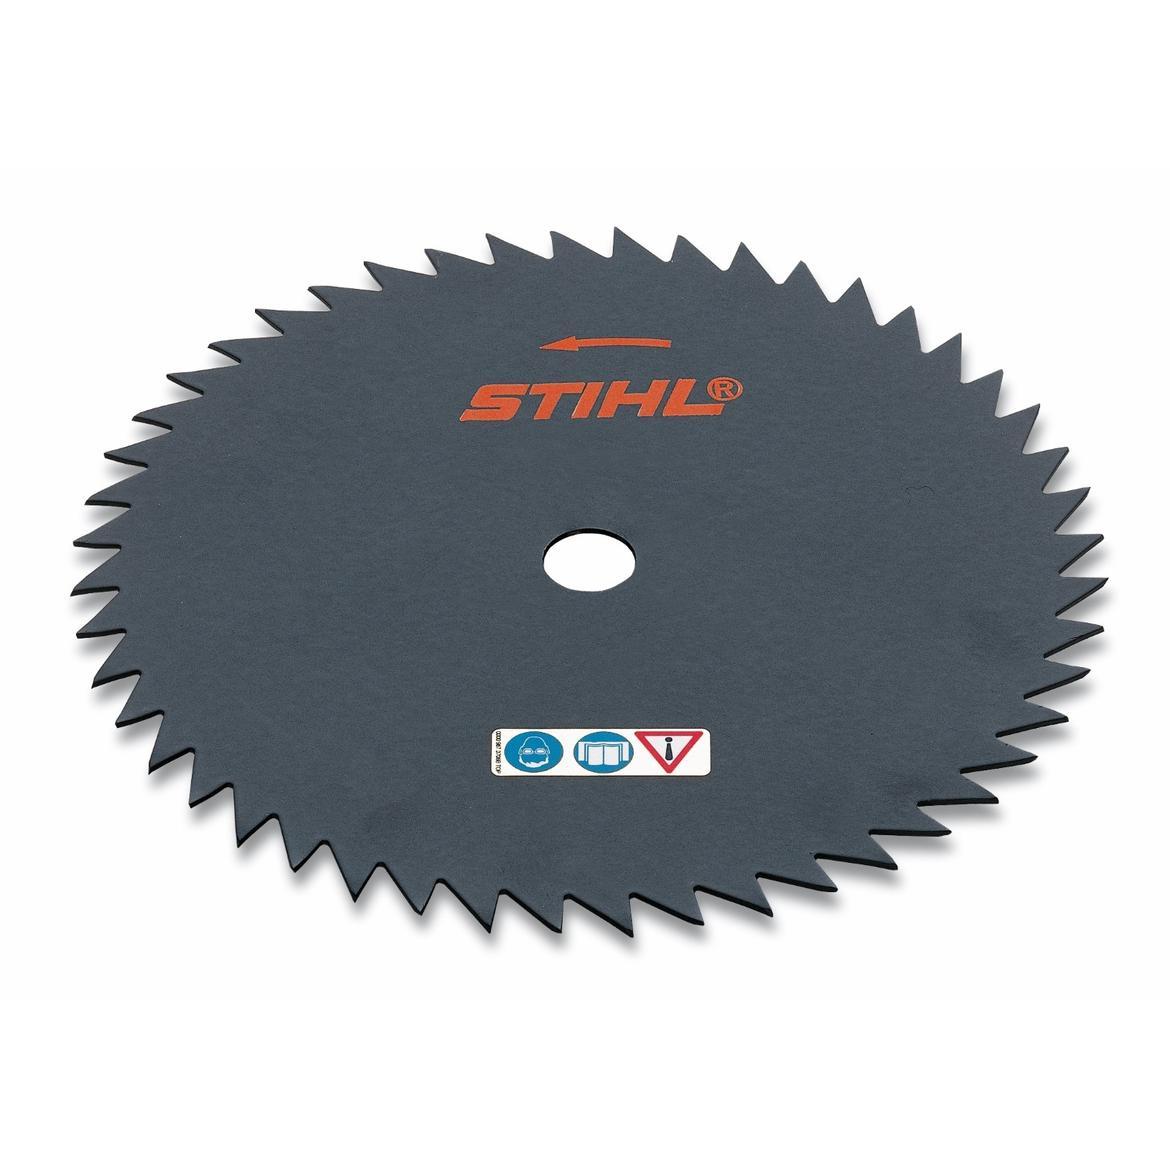 Circular Saw Blade Stihl-Cleaning Tools-STIHL-200-44-diyshop.co.za